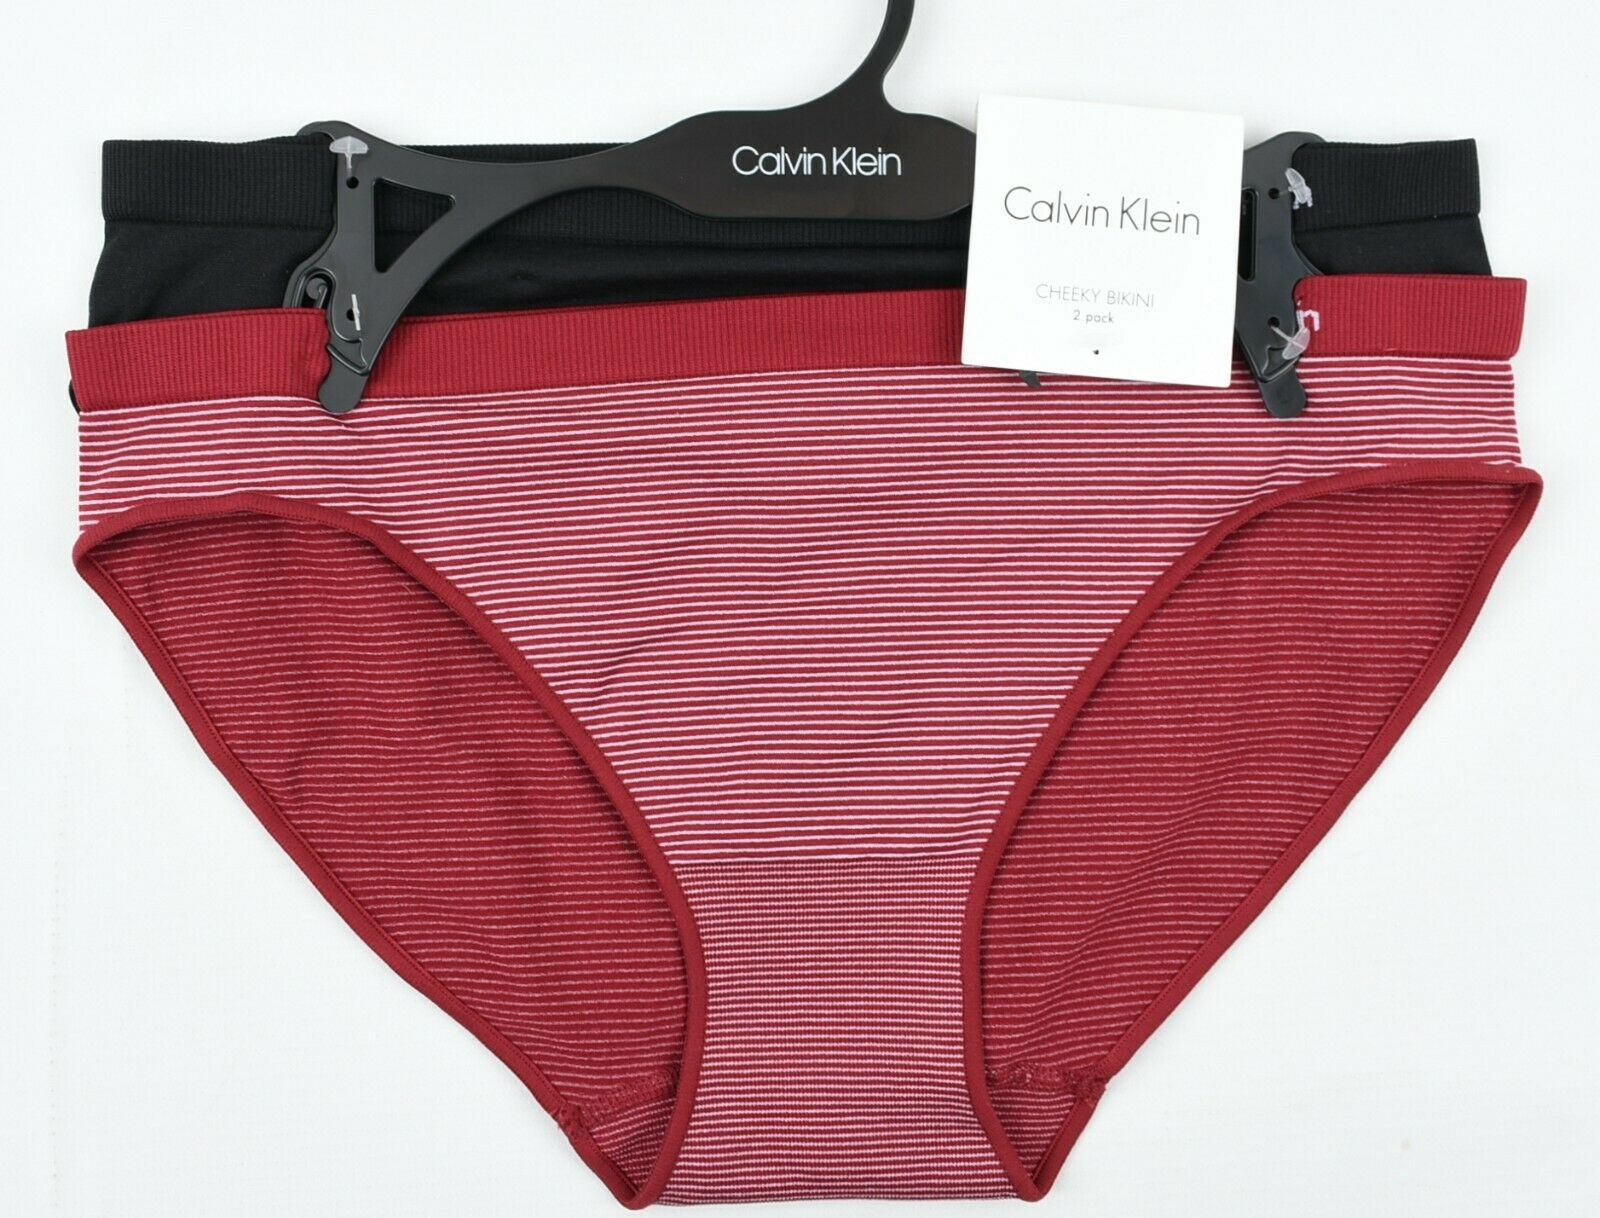 CALVIN KLEIN Women's CHEEKY BIKINI 2-pack Bikini Briefs, Knickers, size M